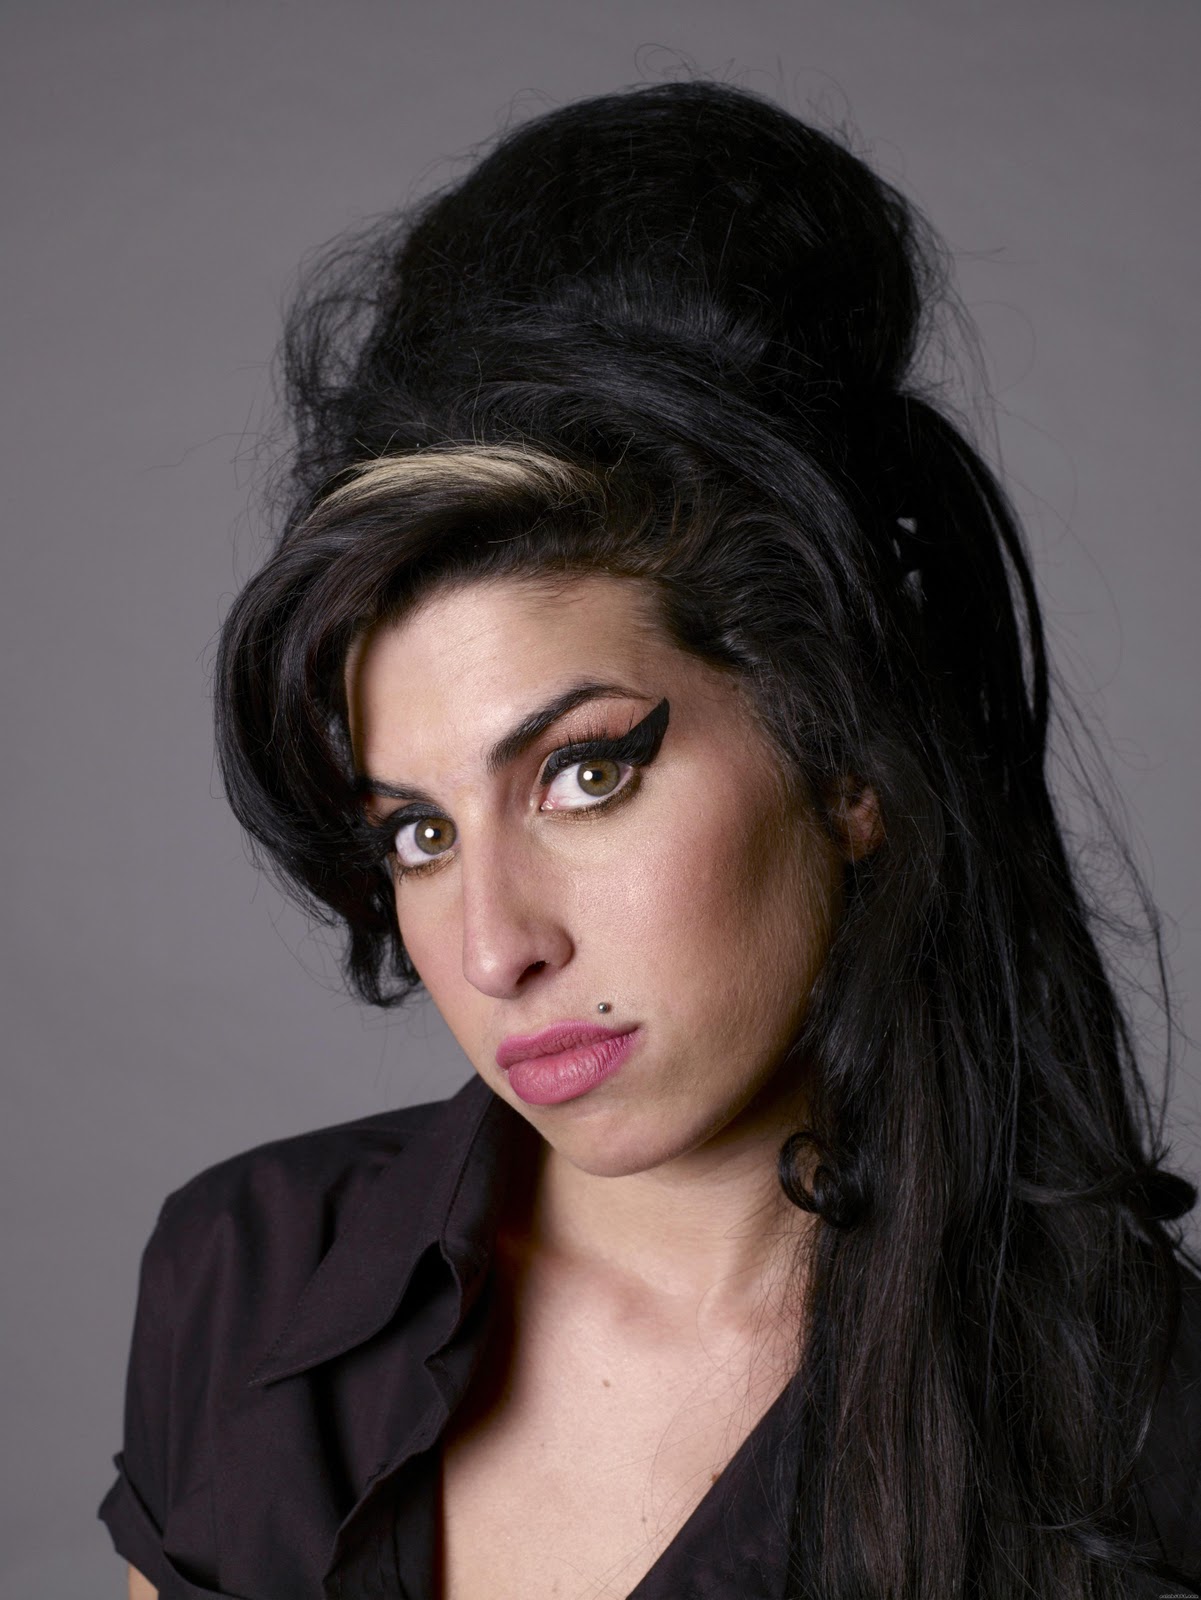 http://3.bp.blogspot.com/-8jCqk_RGZuA/Ttlux2KfeFI/AAAAAAAAAiE/oKolfxtd40k/s1600/Amy-Winehouse-wallpaper-4.jpg